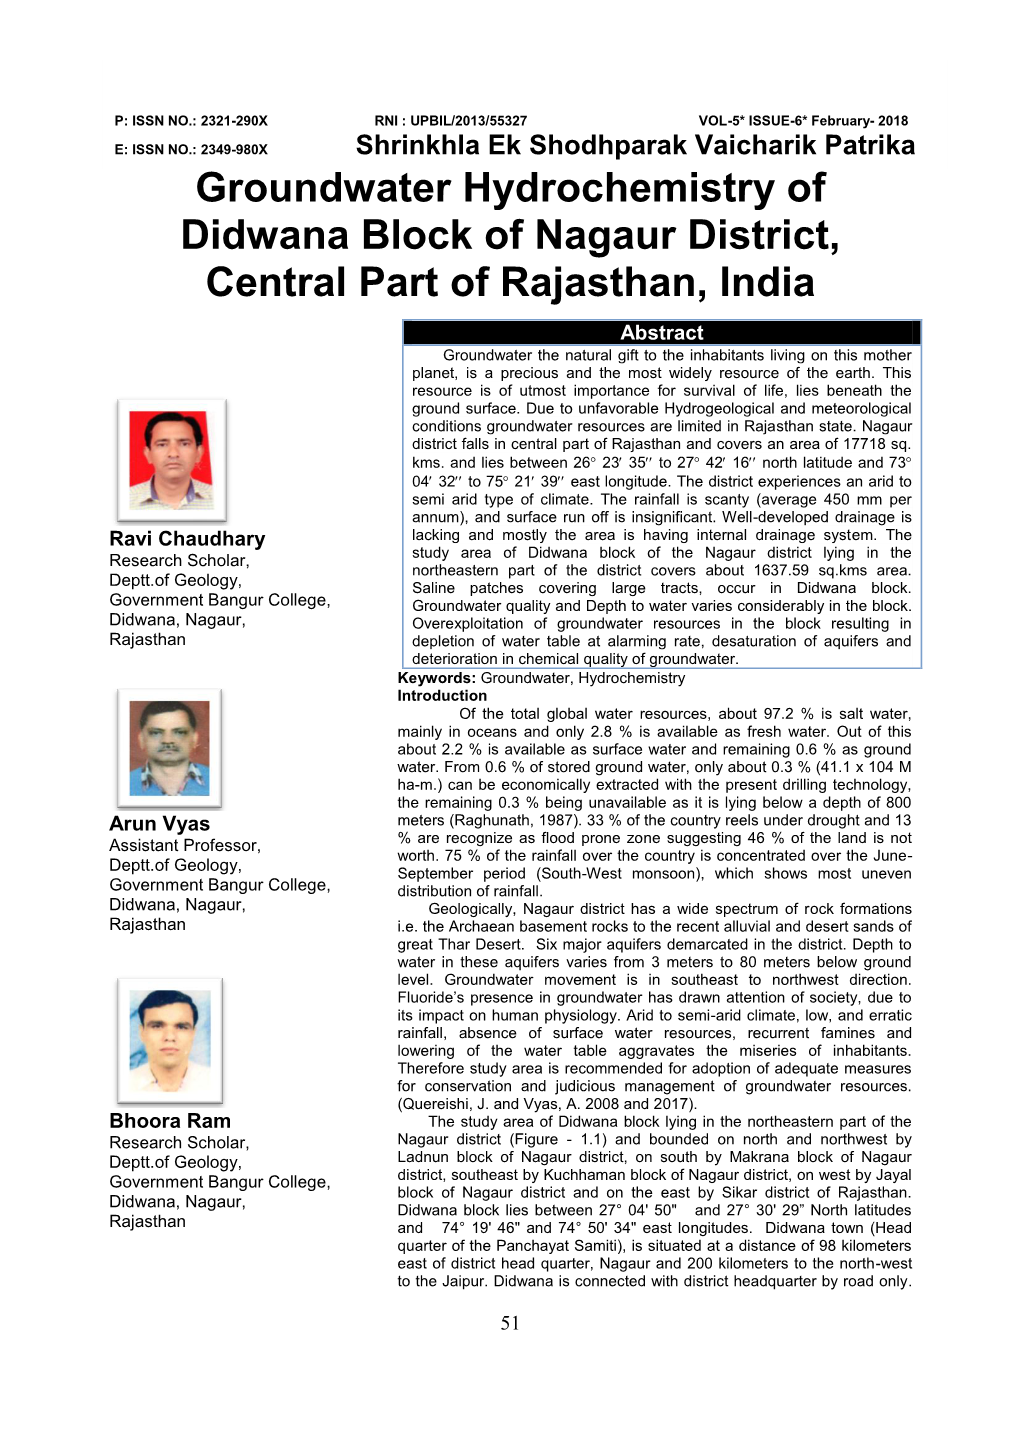 Groundwater Hydrochemistry of Didwana Block of Nagaur District